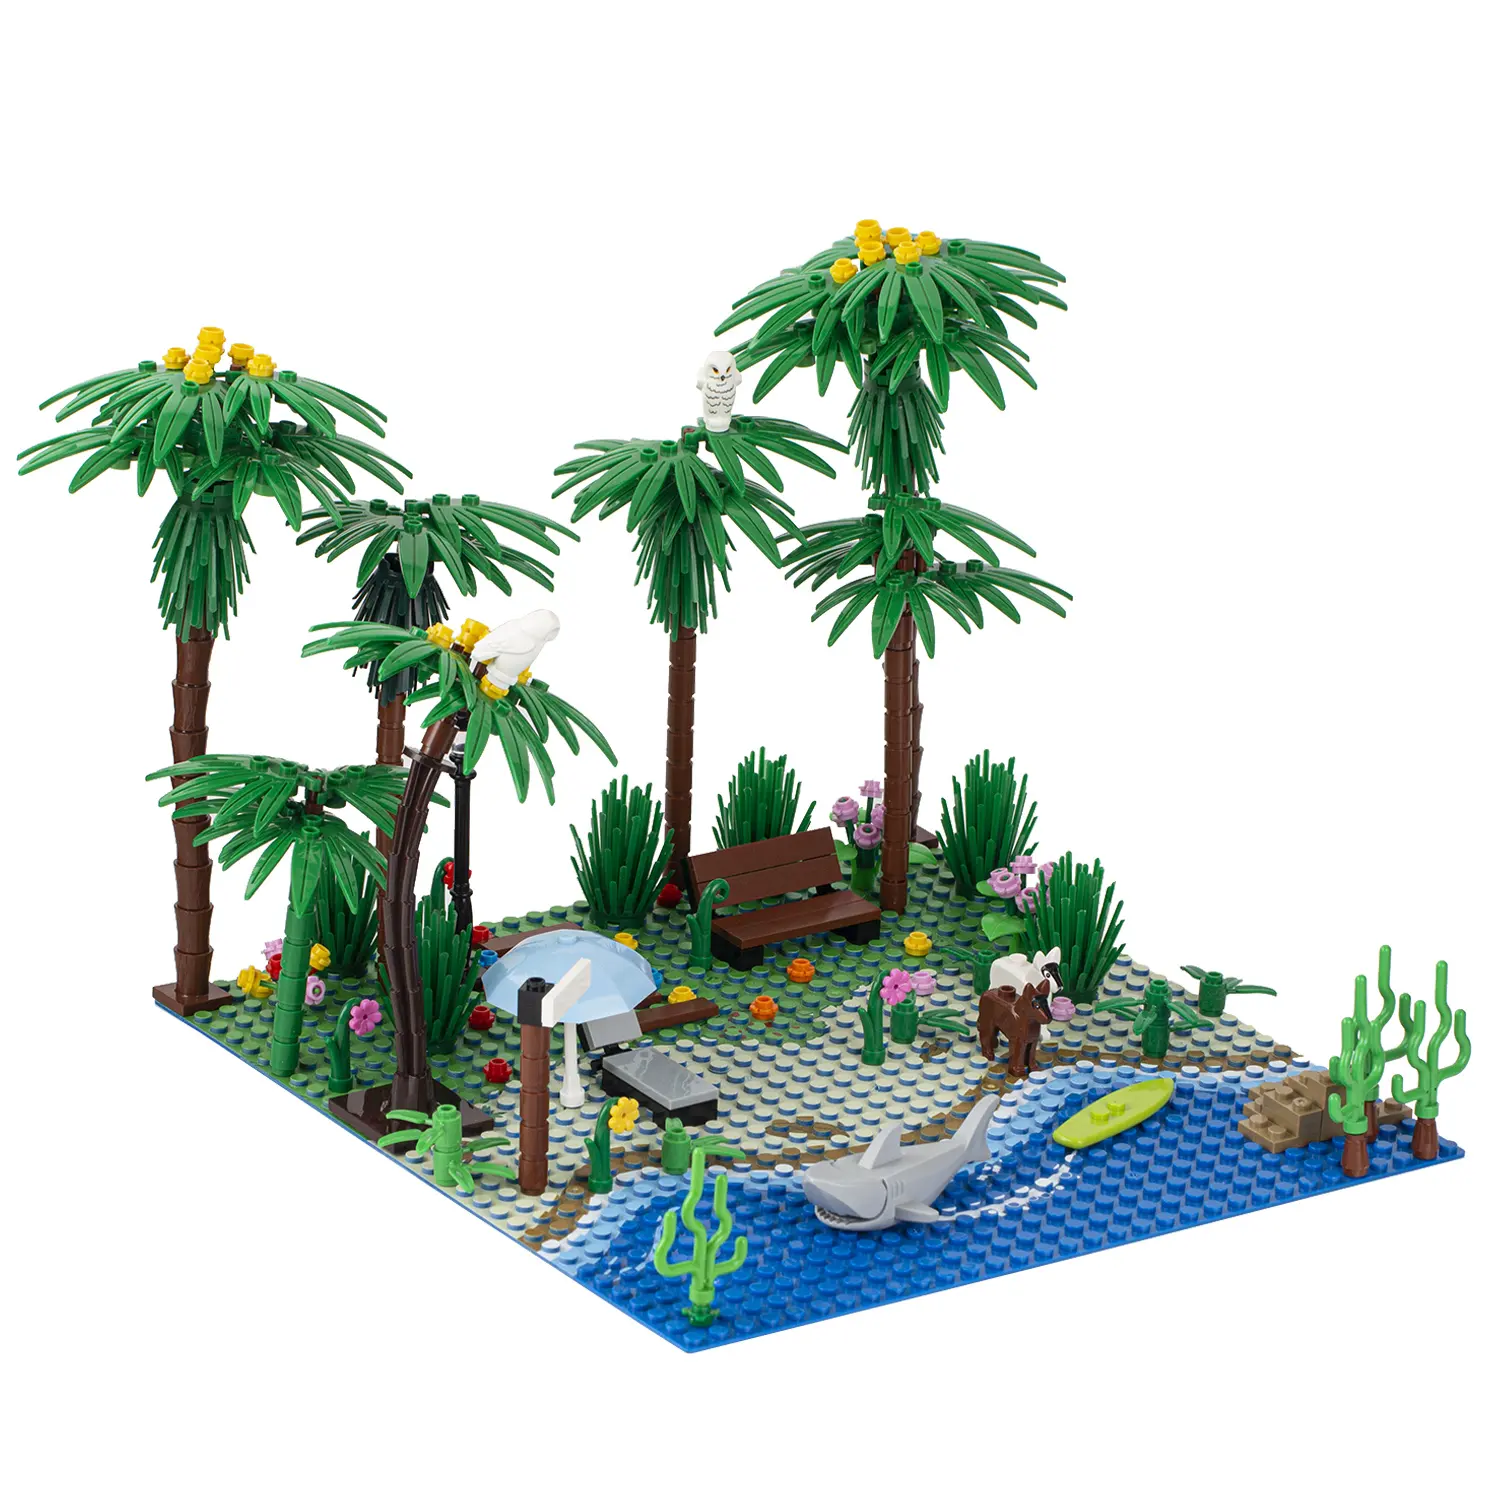 MOC3008 City Vacation Seaside Beach Street View Kokosnuss bäume Lounge Stühle Surf schirme Hai Bausteine Puzzle Spielzeug